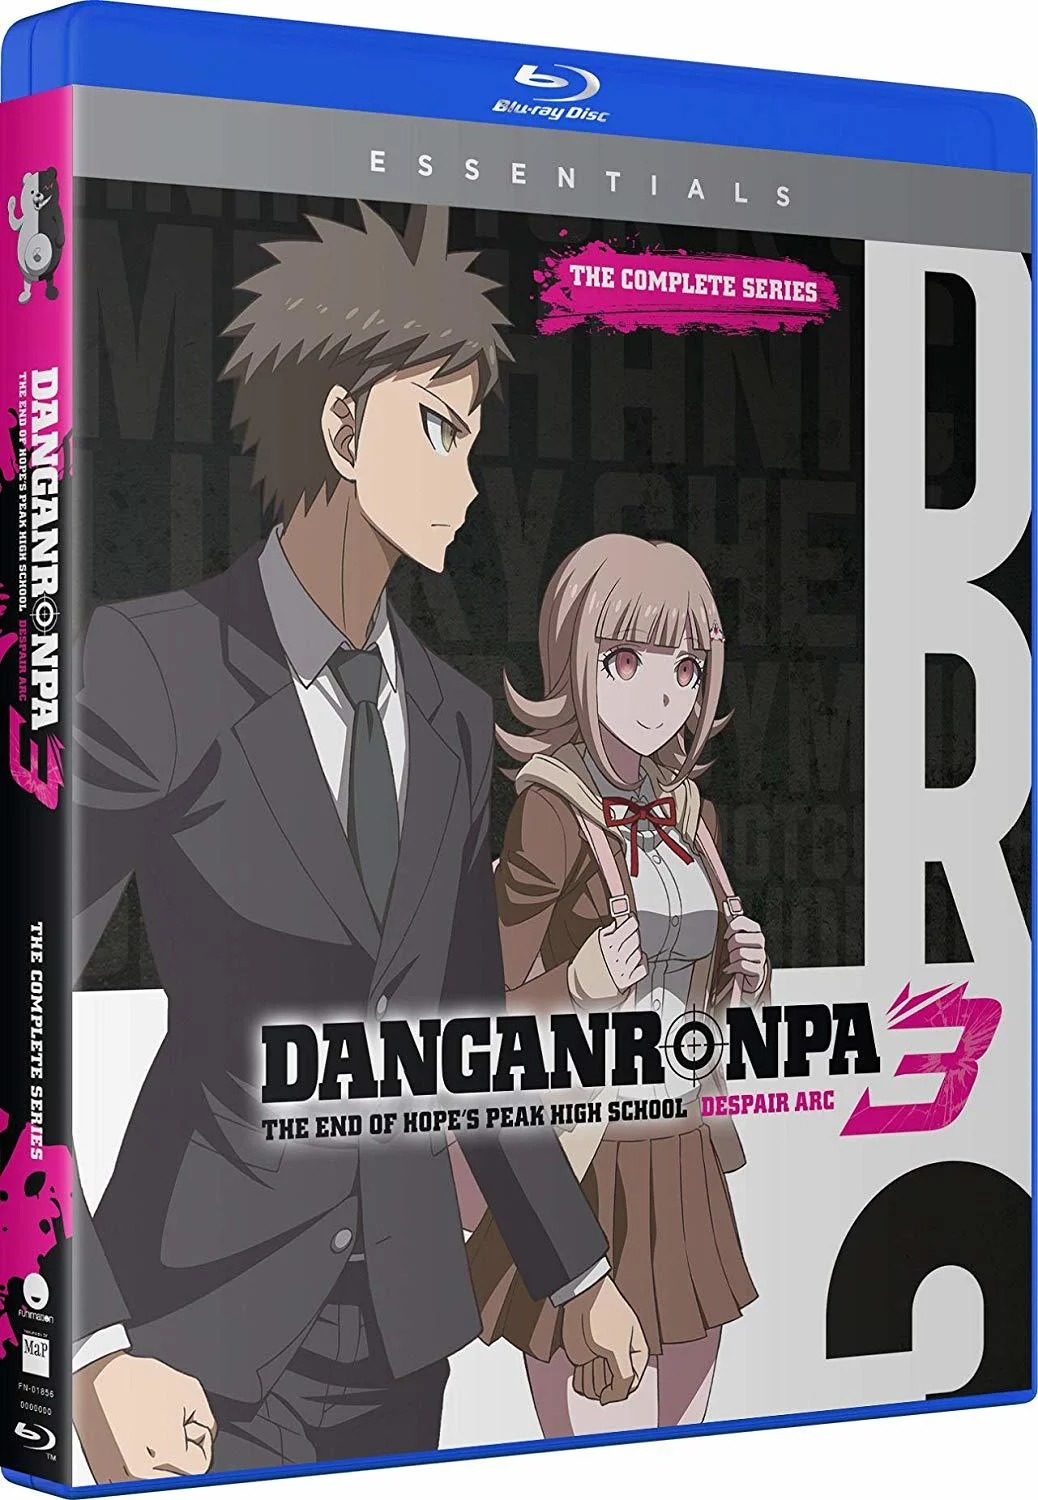 Danganronpa 3: The End of Hope’s Peak High School: Despair Arc (Essentials) (Blu-ray)